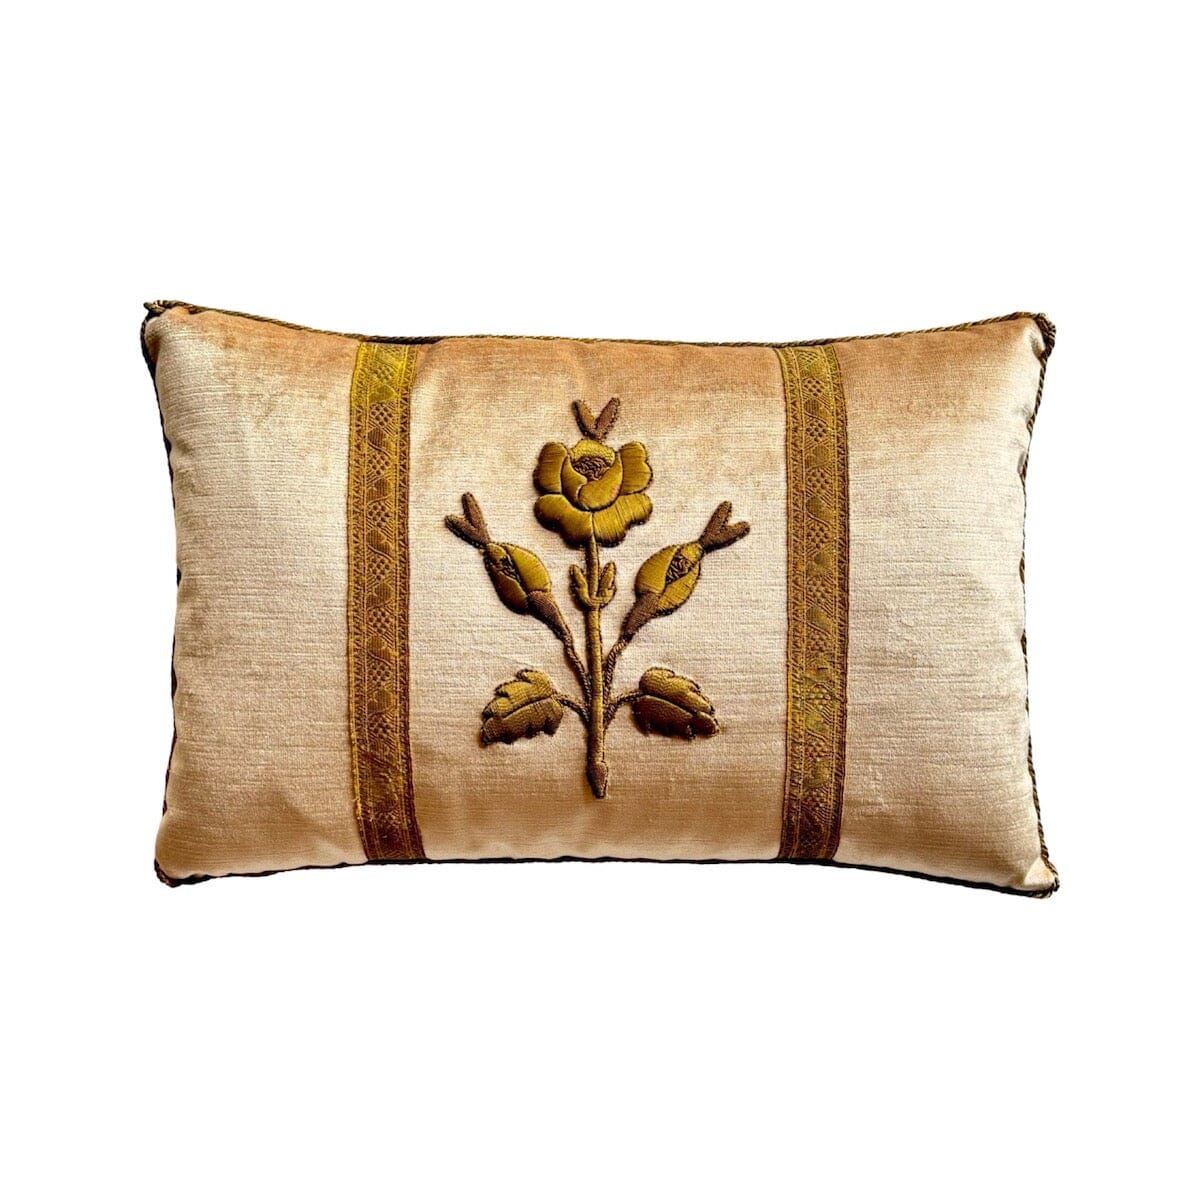 Antique European Raised Gold Metallic Embroidery (#E050724A&B | 12 x 18") New Pillows B. Viz Design 